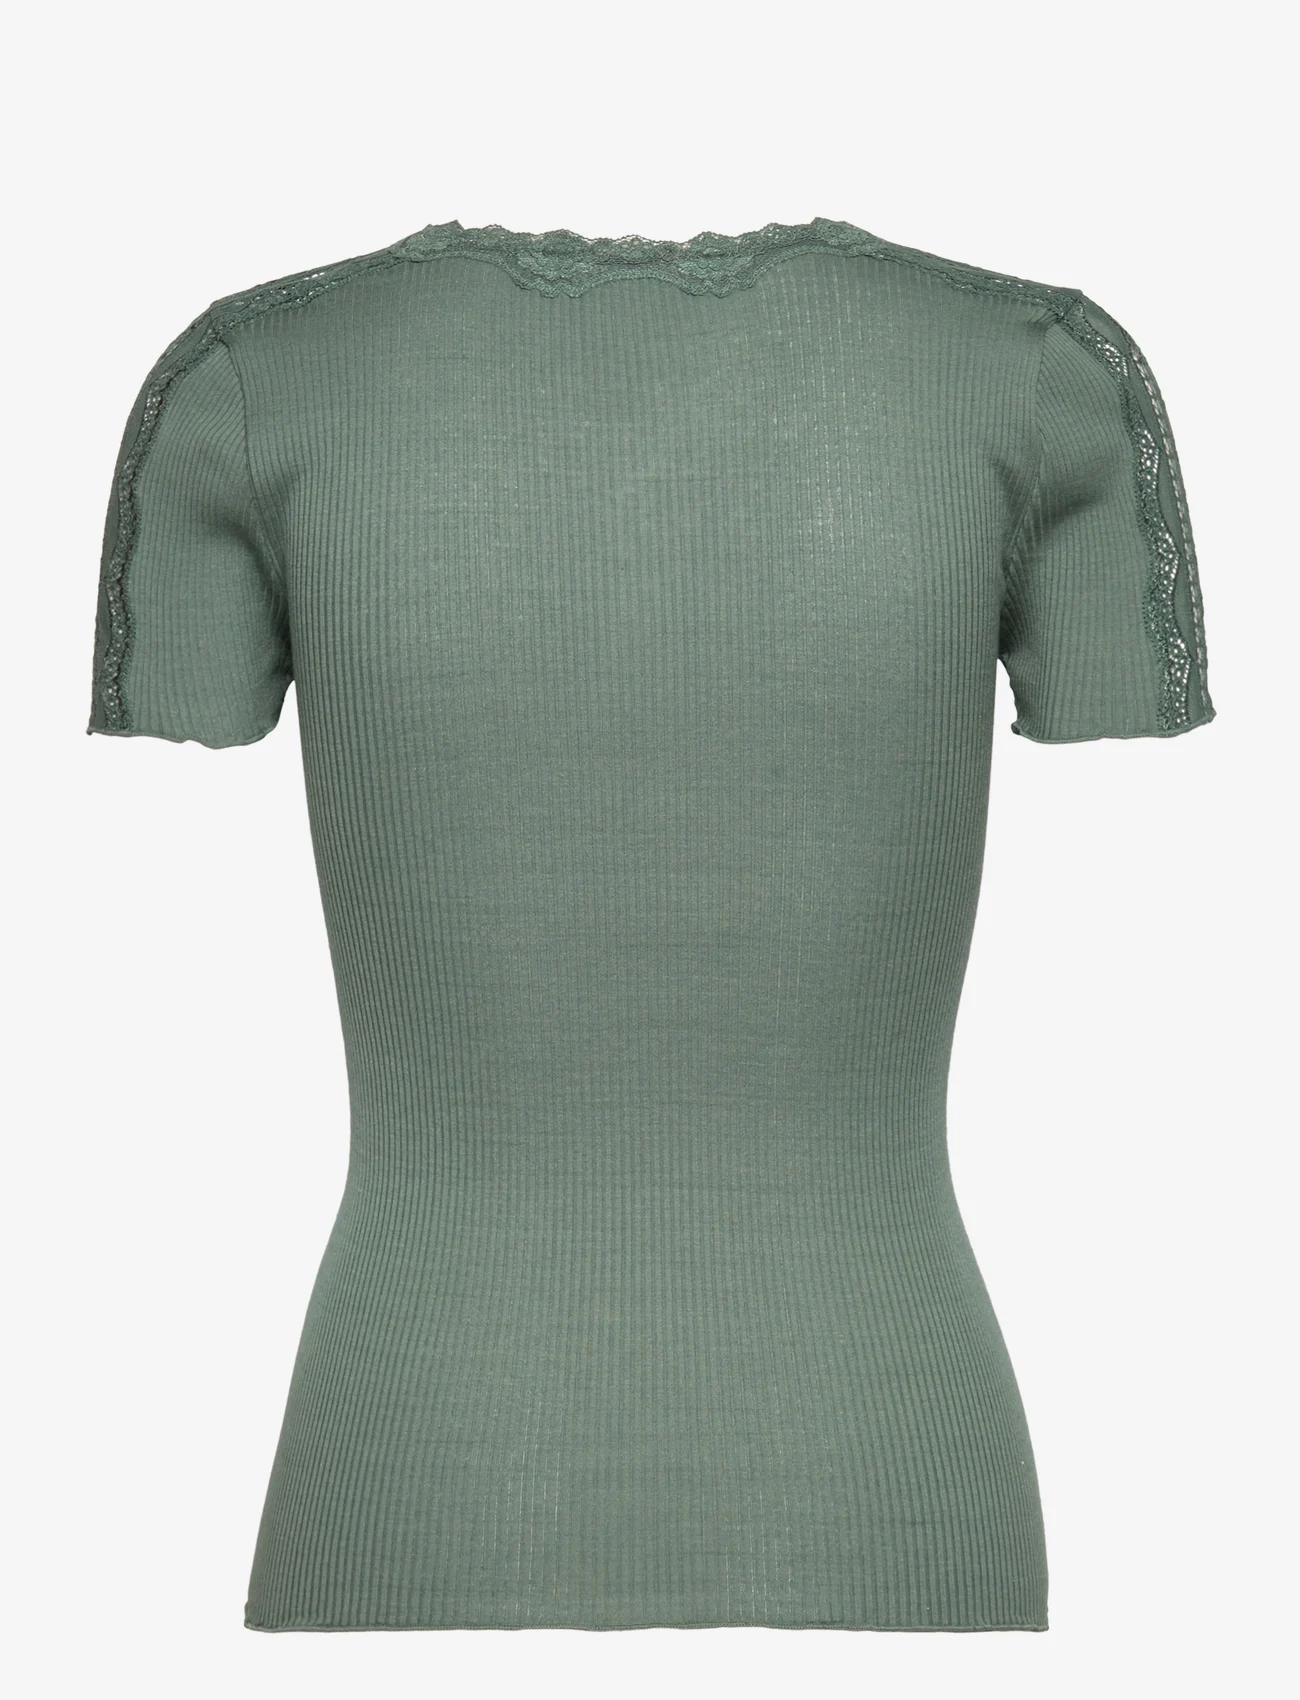 Rosemunde - Silk t-shirt w/ lace - t-shirts - forest - 1